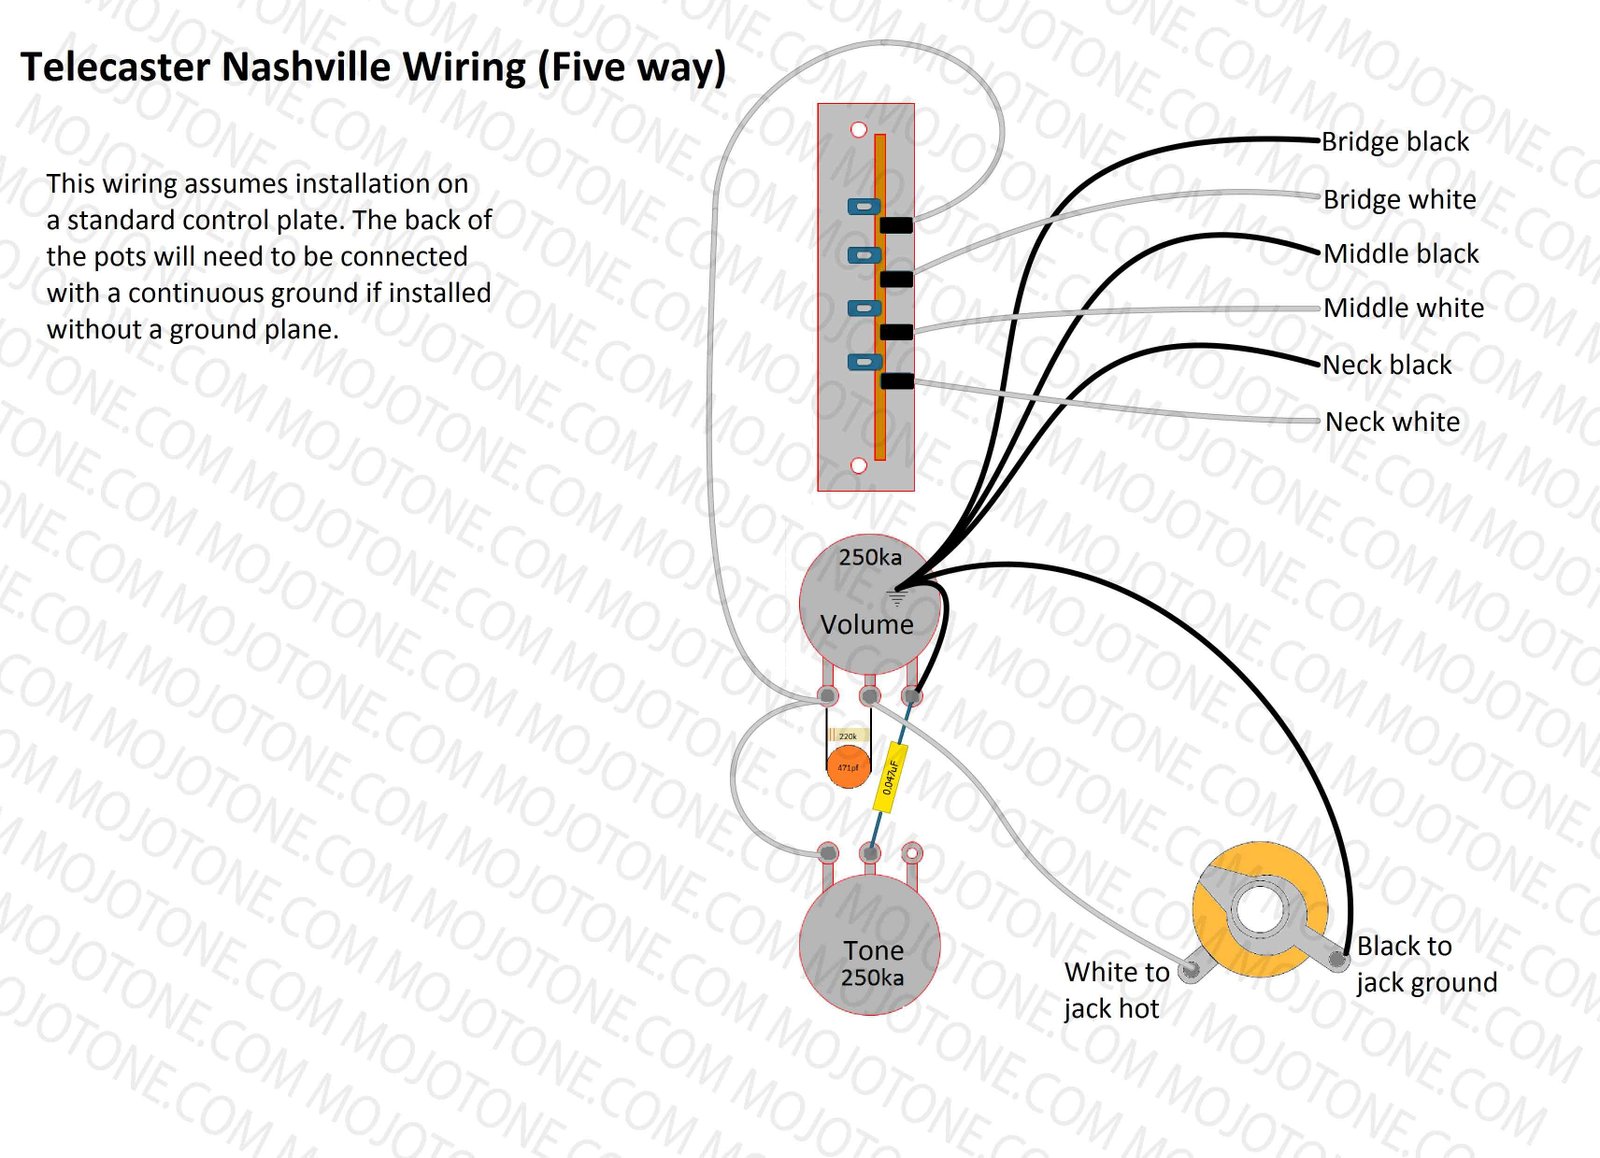 Telecaster Nashville Wiring Diagram Guitar Gear Geek